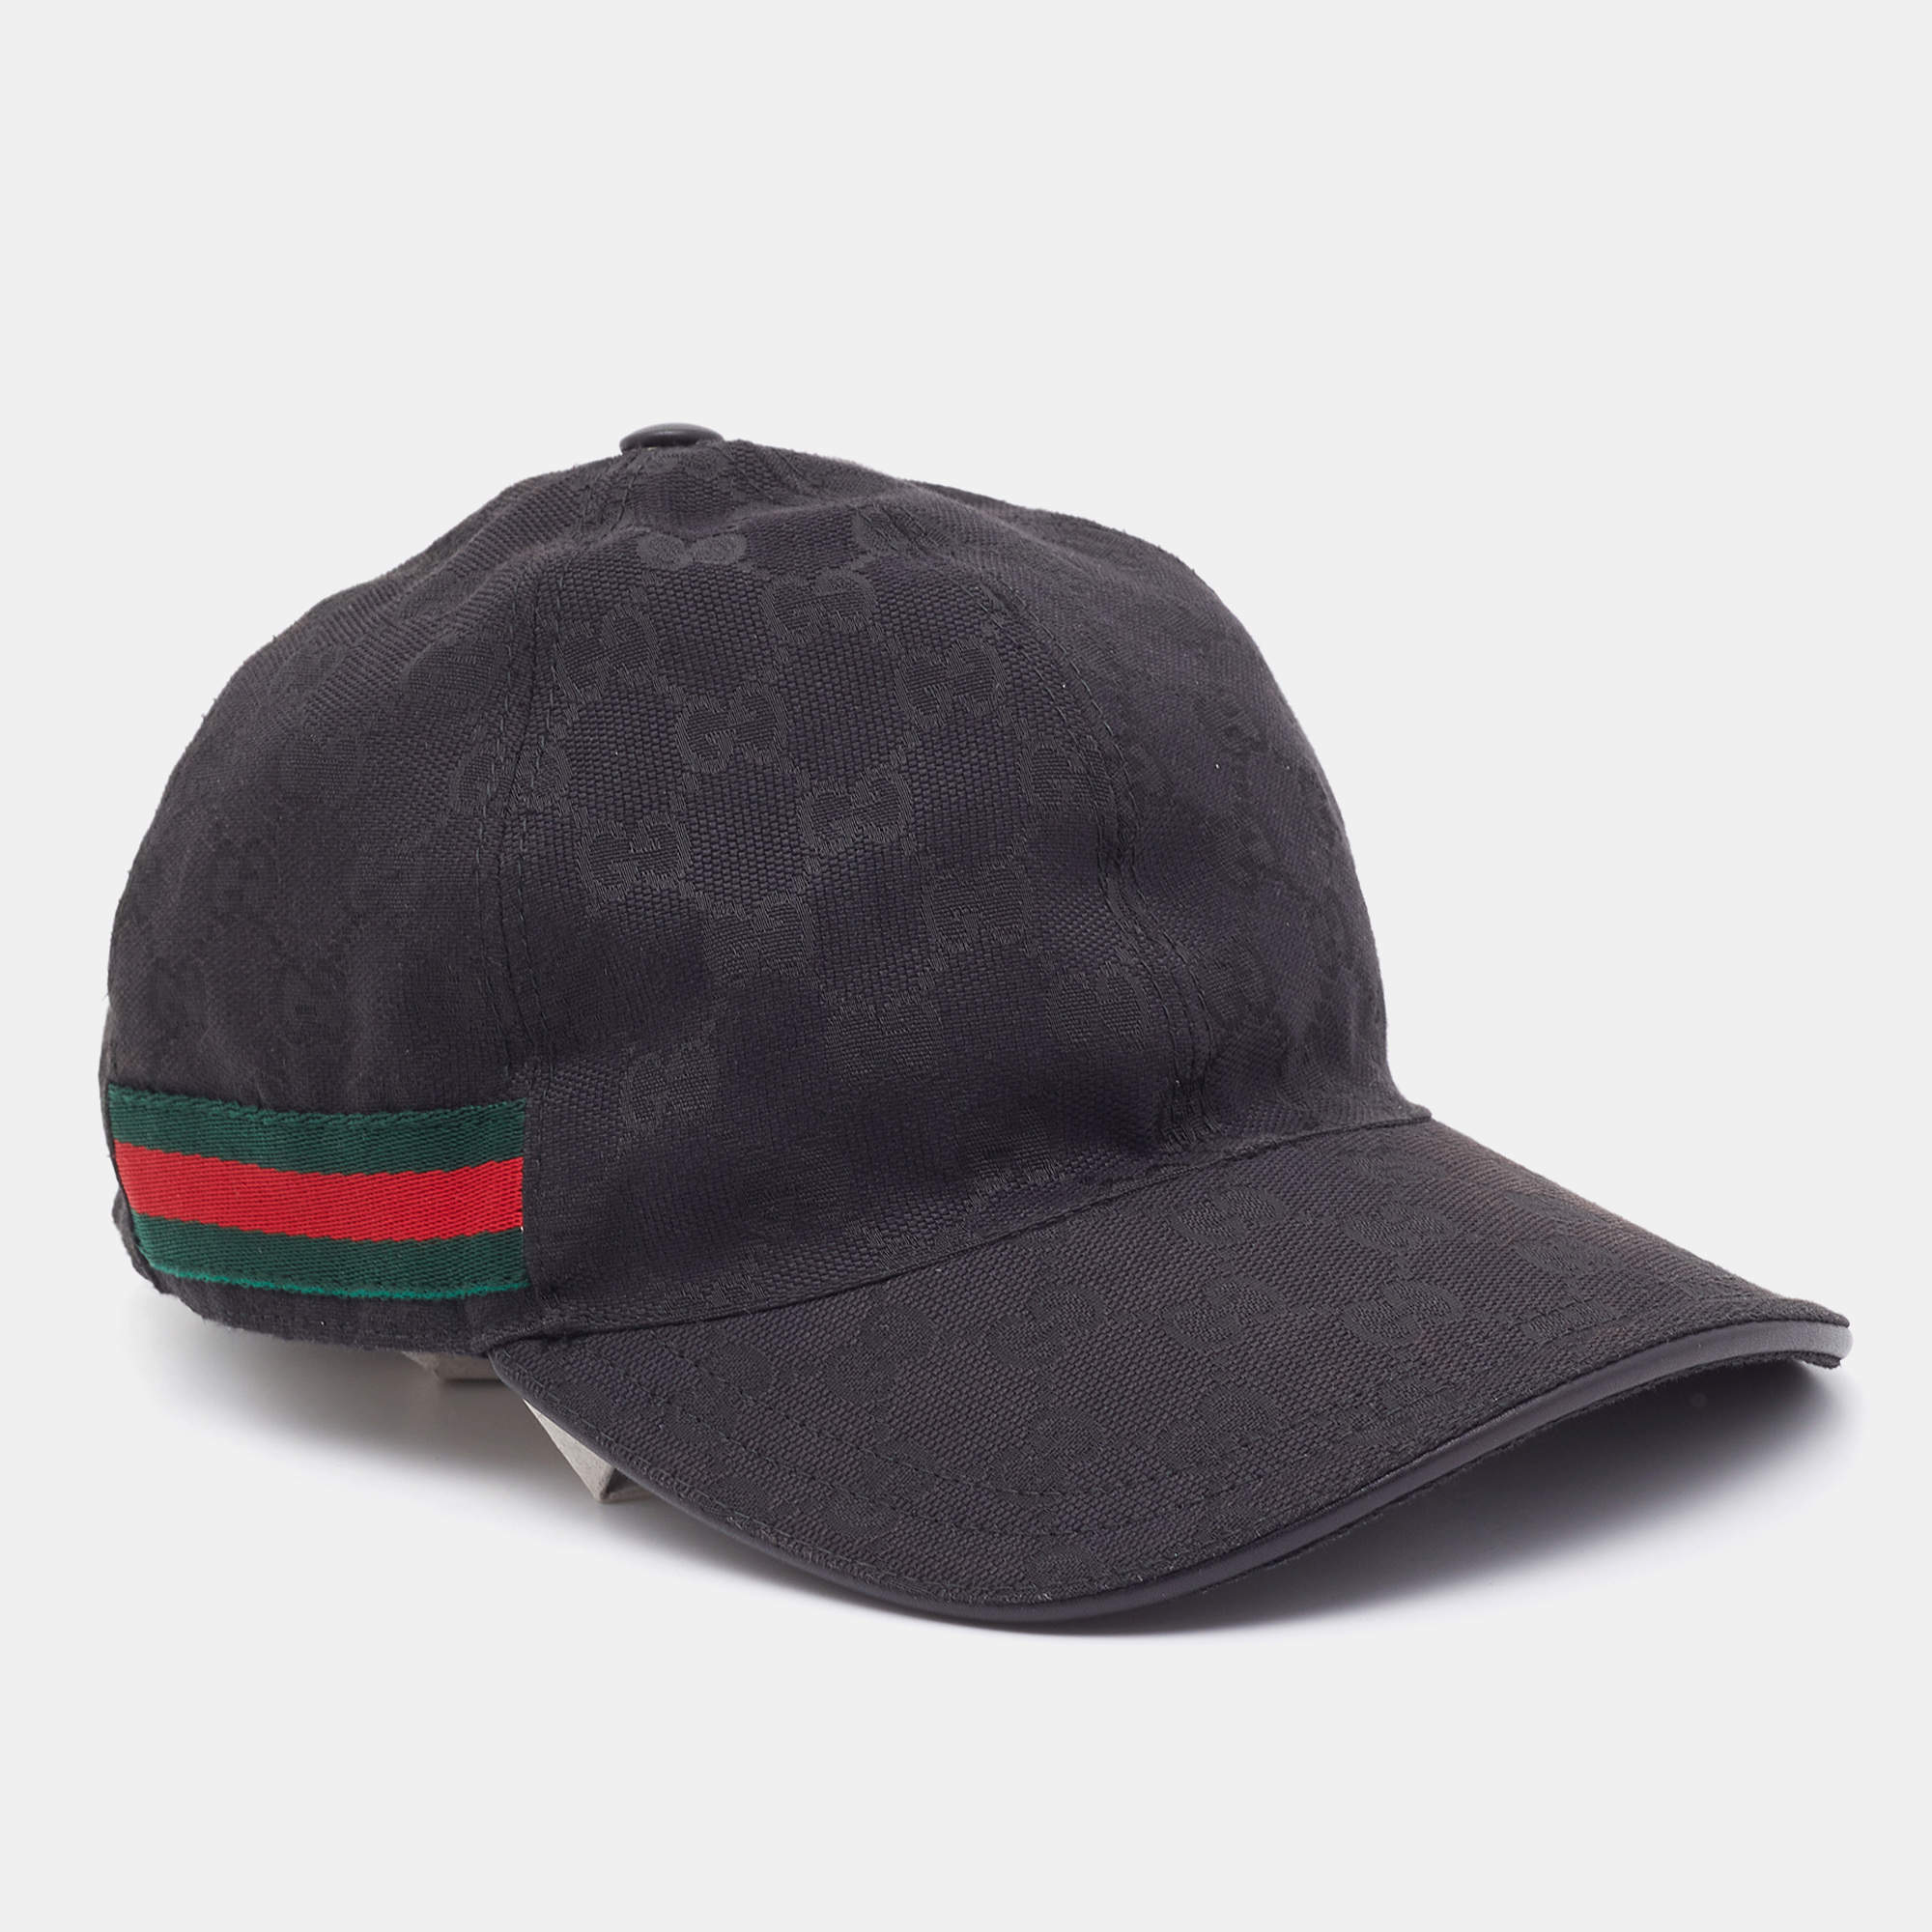 Gucci Men's Black Baseball Caps for sale